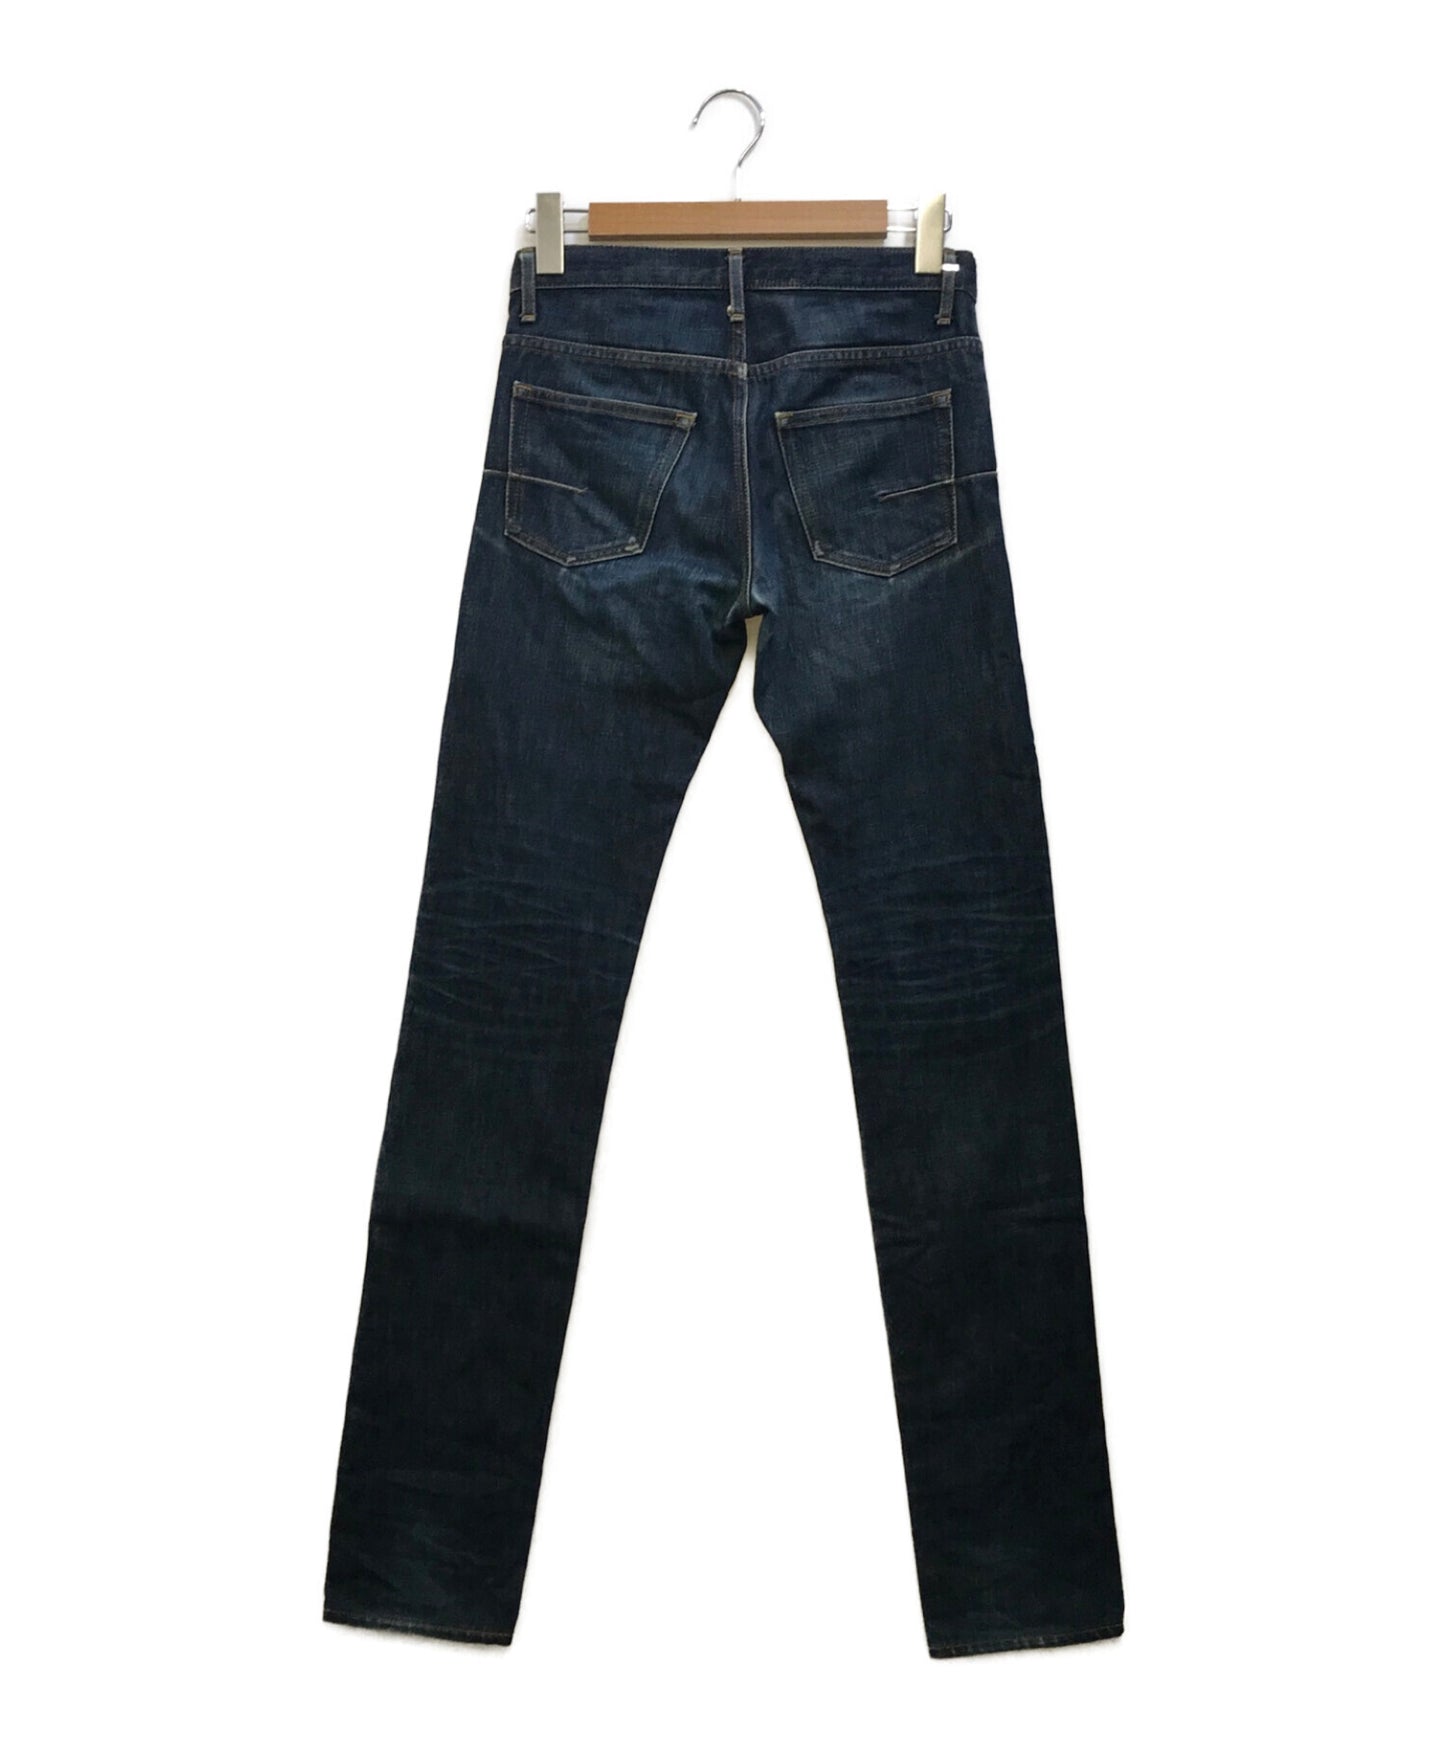 Hedi Slimane的Dior Homme 06SS瘦牛仔布裤PIH1011565 BECK时期